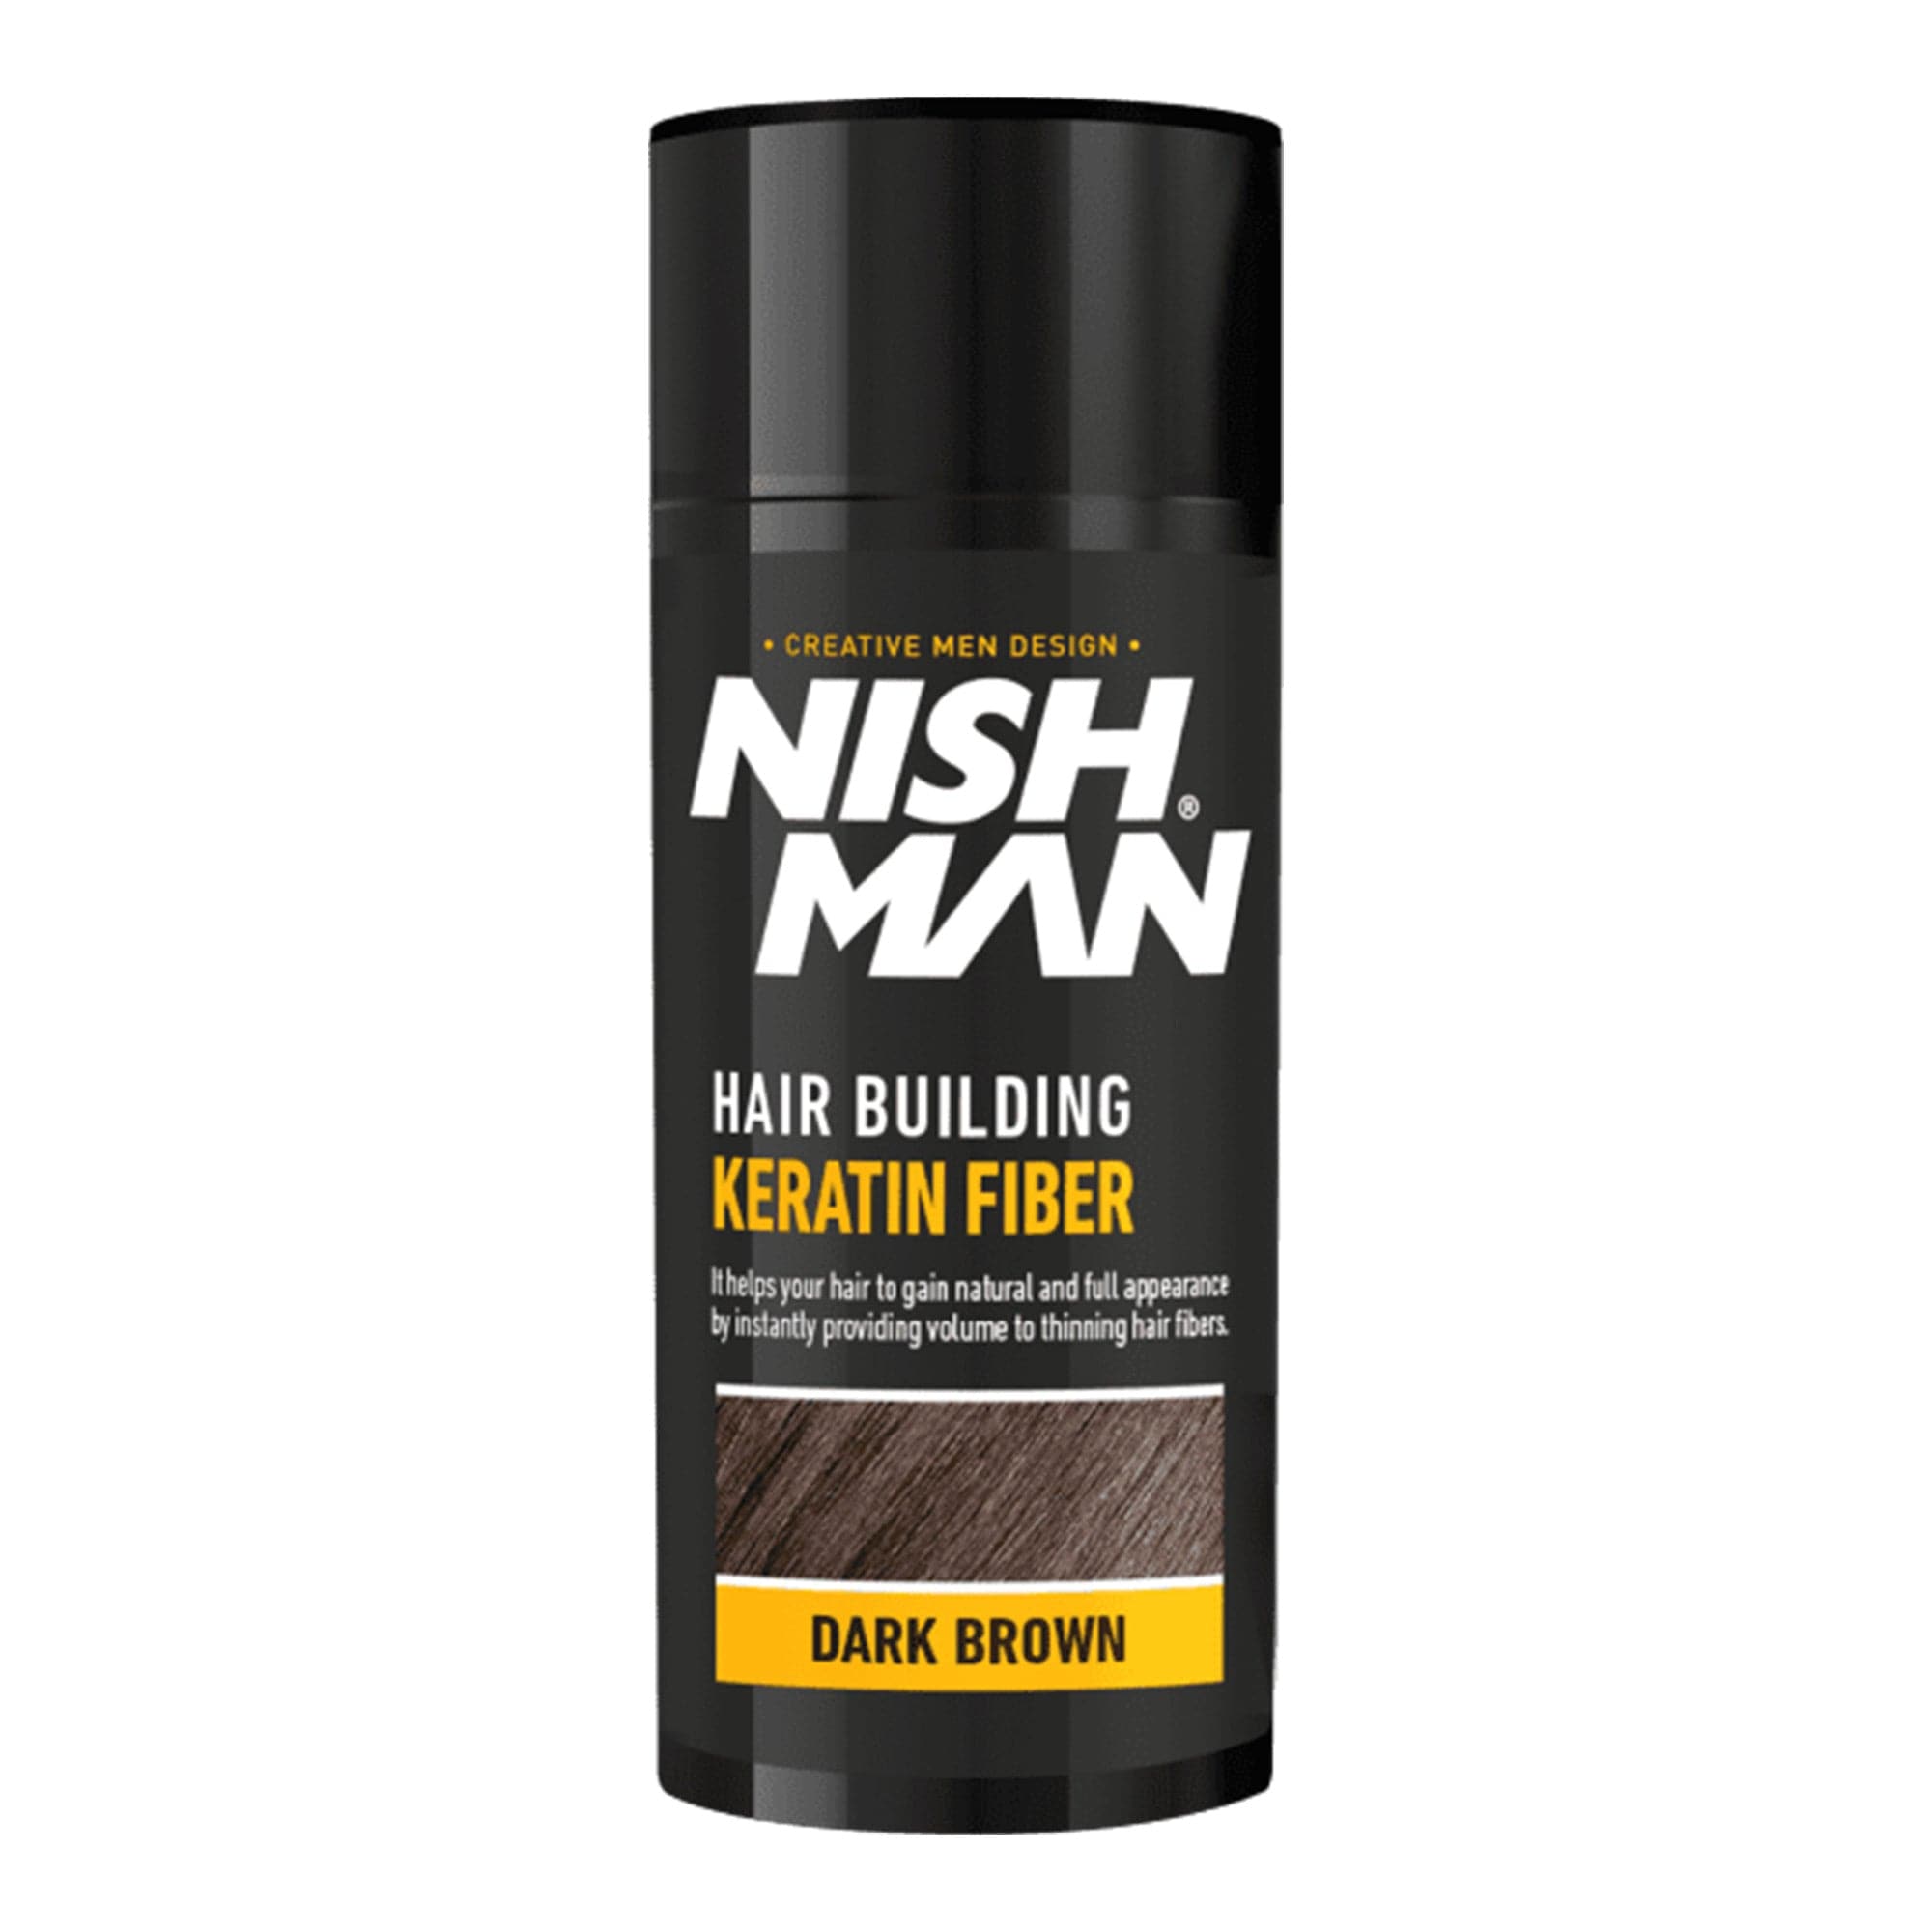 Nishman - Hair Building Keratin Fiber Dark Brown 21g